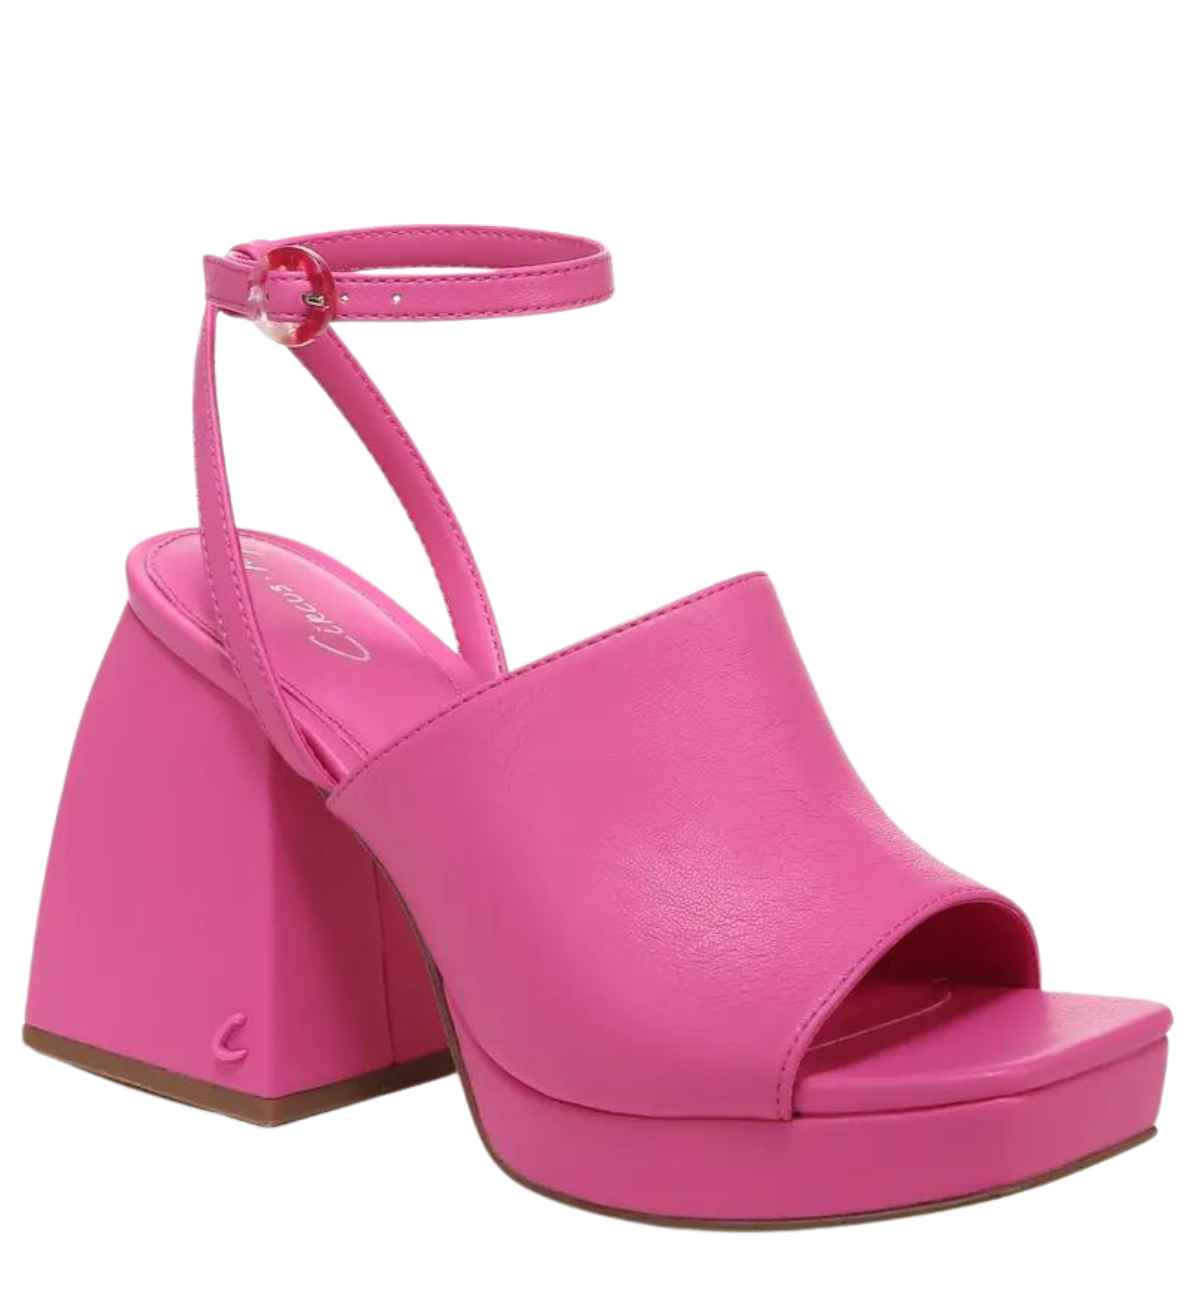 Hot Pink Barbie Core Fashion Platform Sandal on white background.